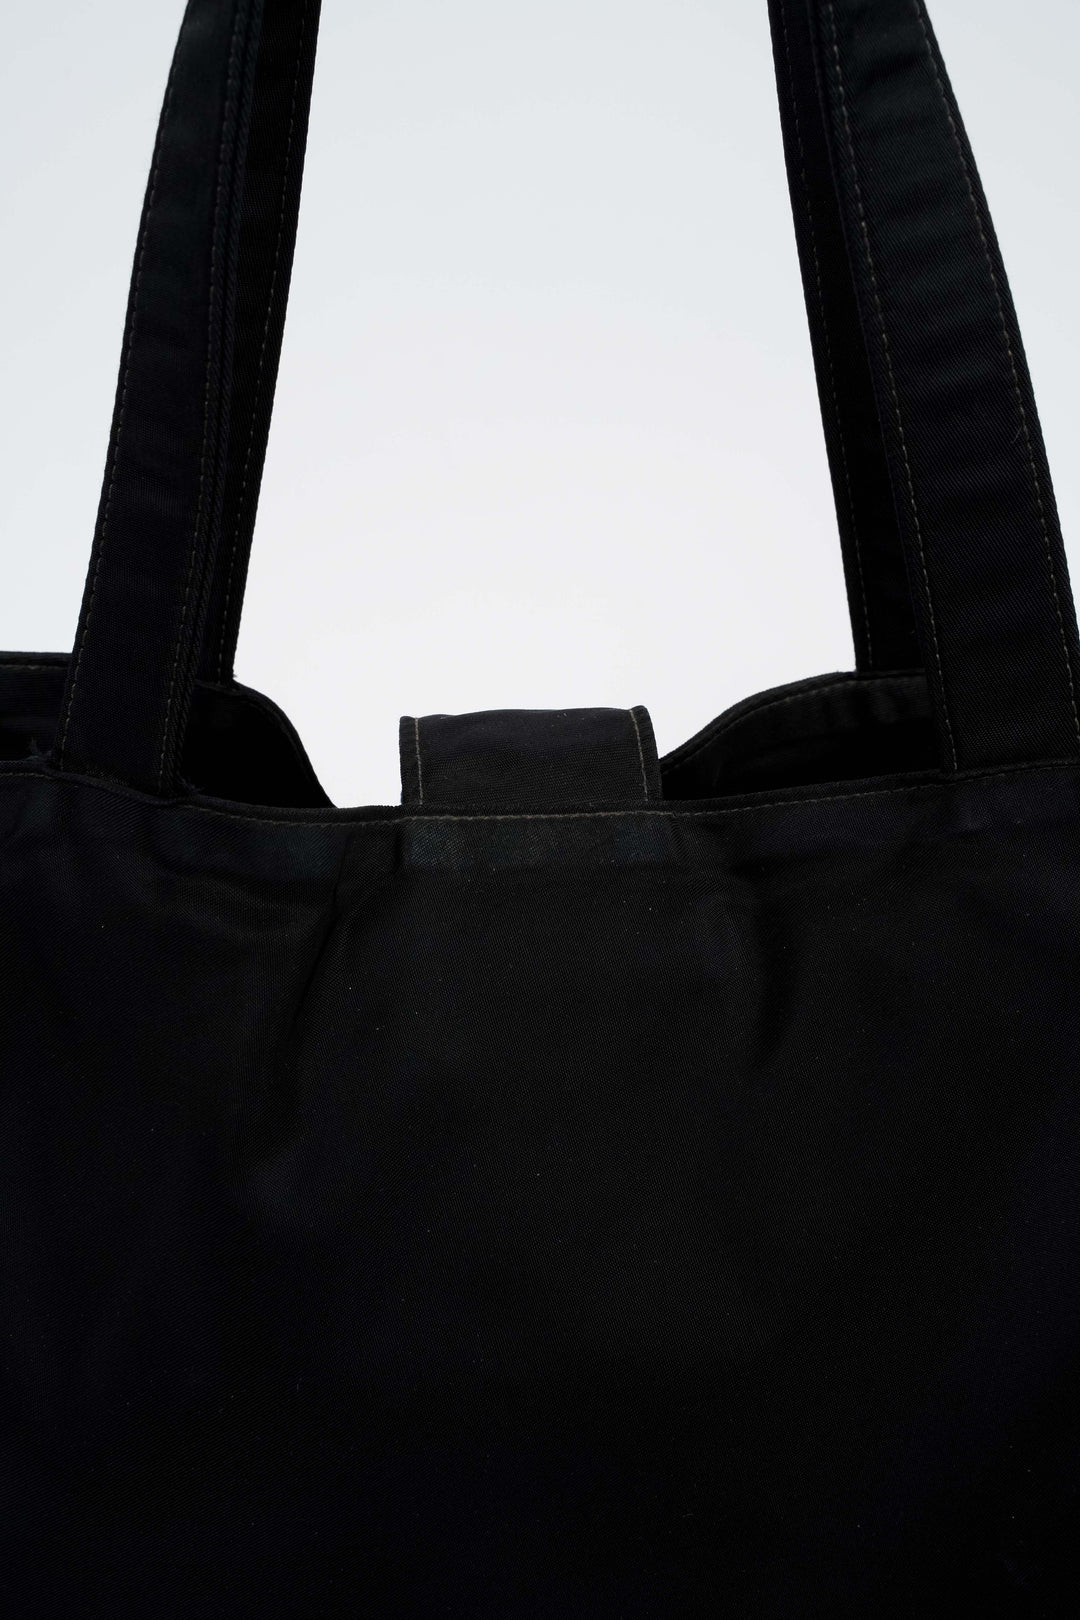 Black Nylon Bag - Volver